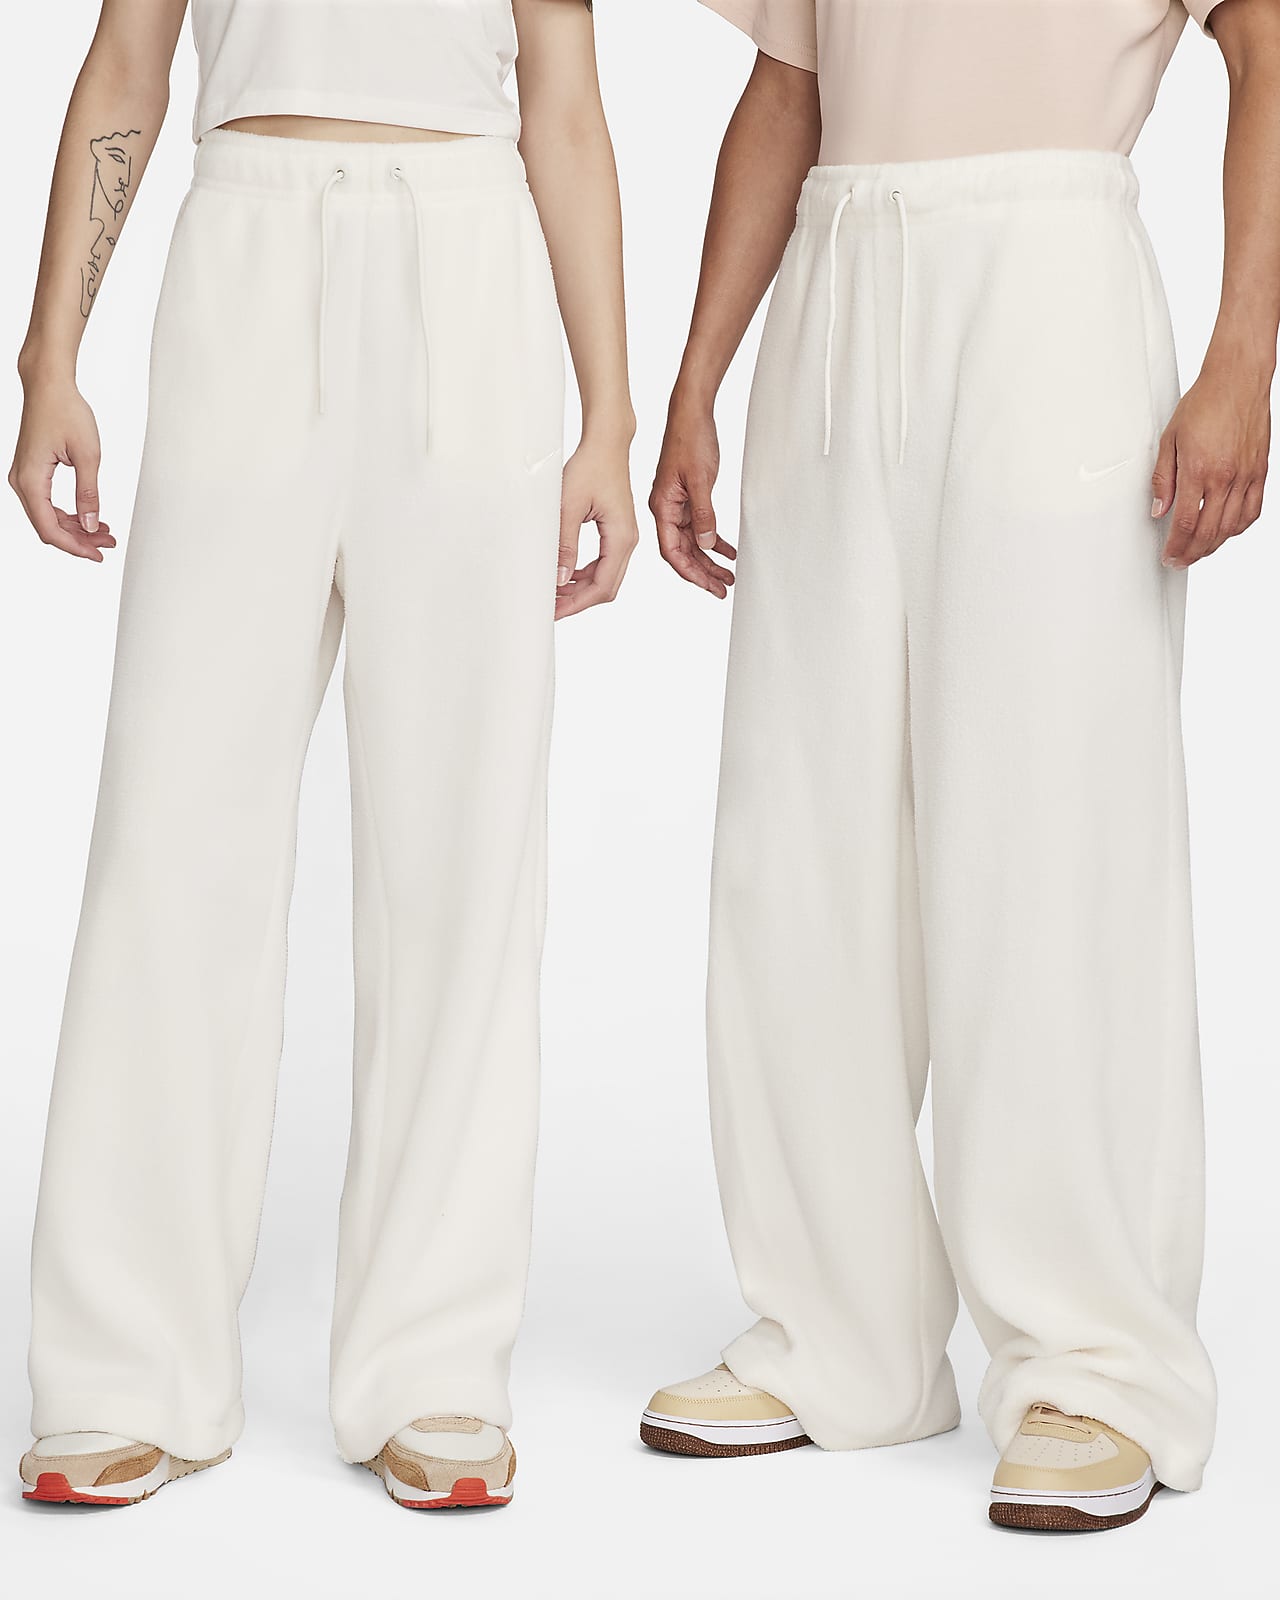 Cozy Warm Fuzzy Teddy Bear Pants Fleece Lined Pants Fleece Joggers | Pants  for women, Women pants casual, Fashion pants